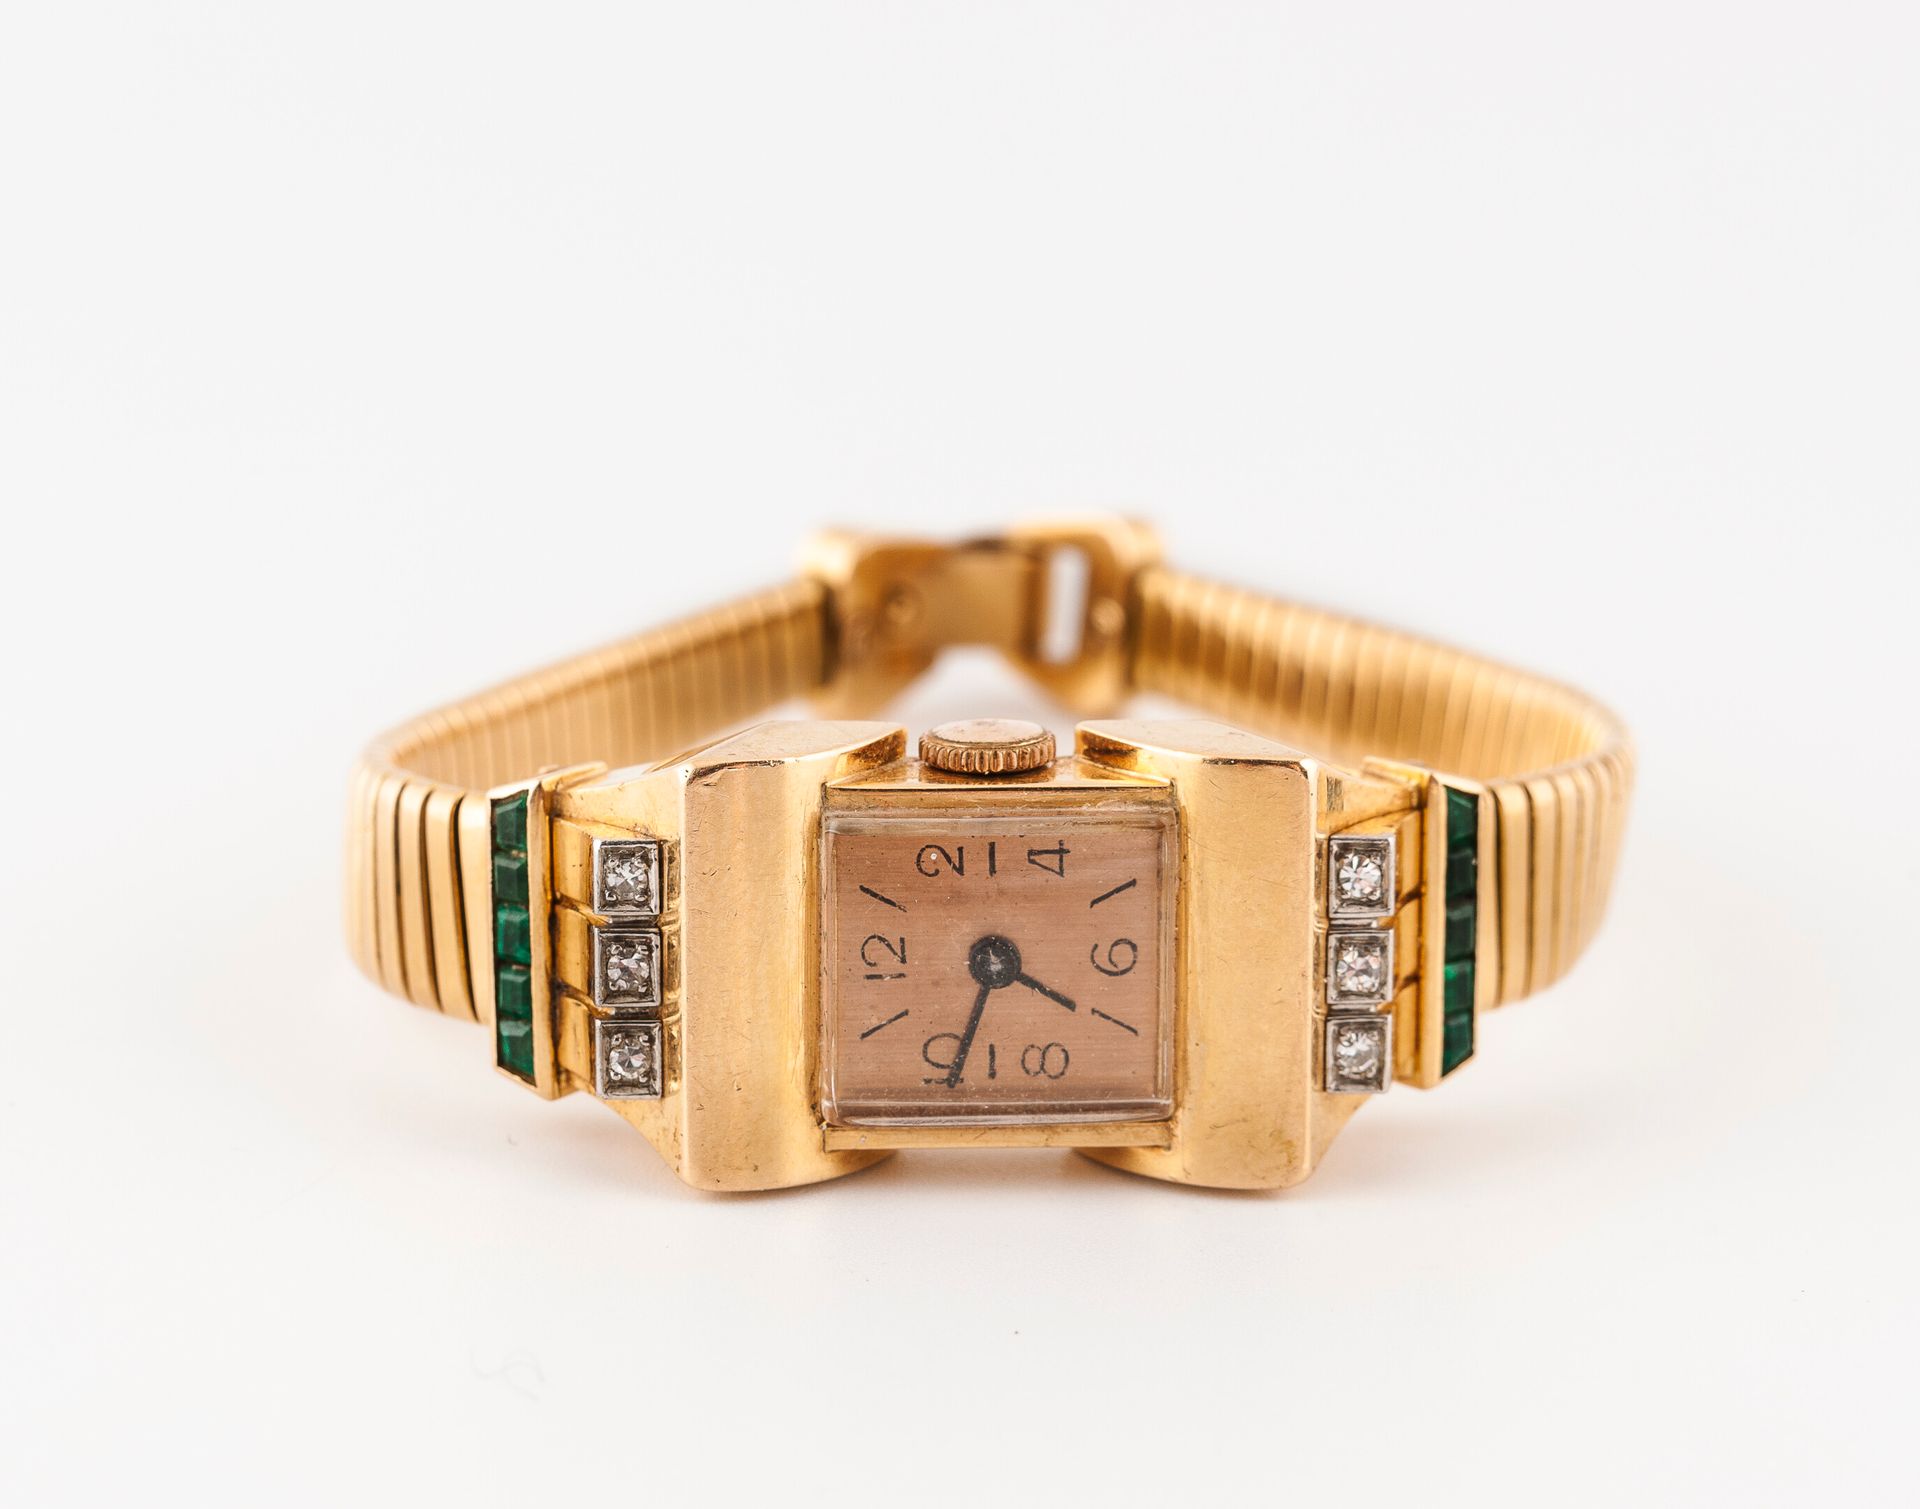 DOMINA Reloj de pulsera de señora en oro amarillo (750).

Caja rectangular integ&hellip;